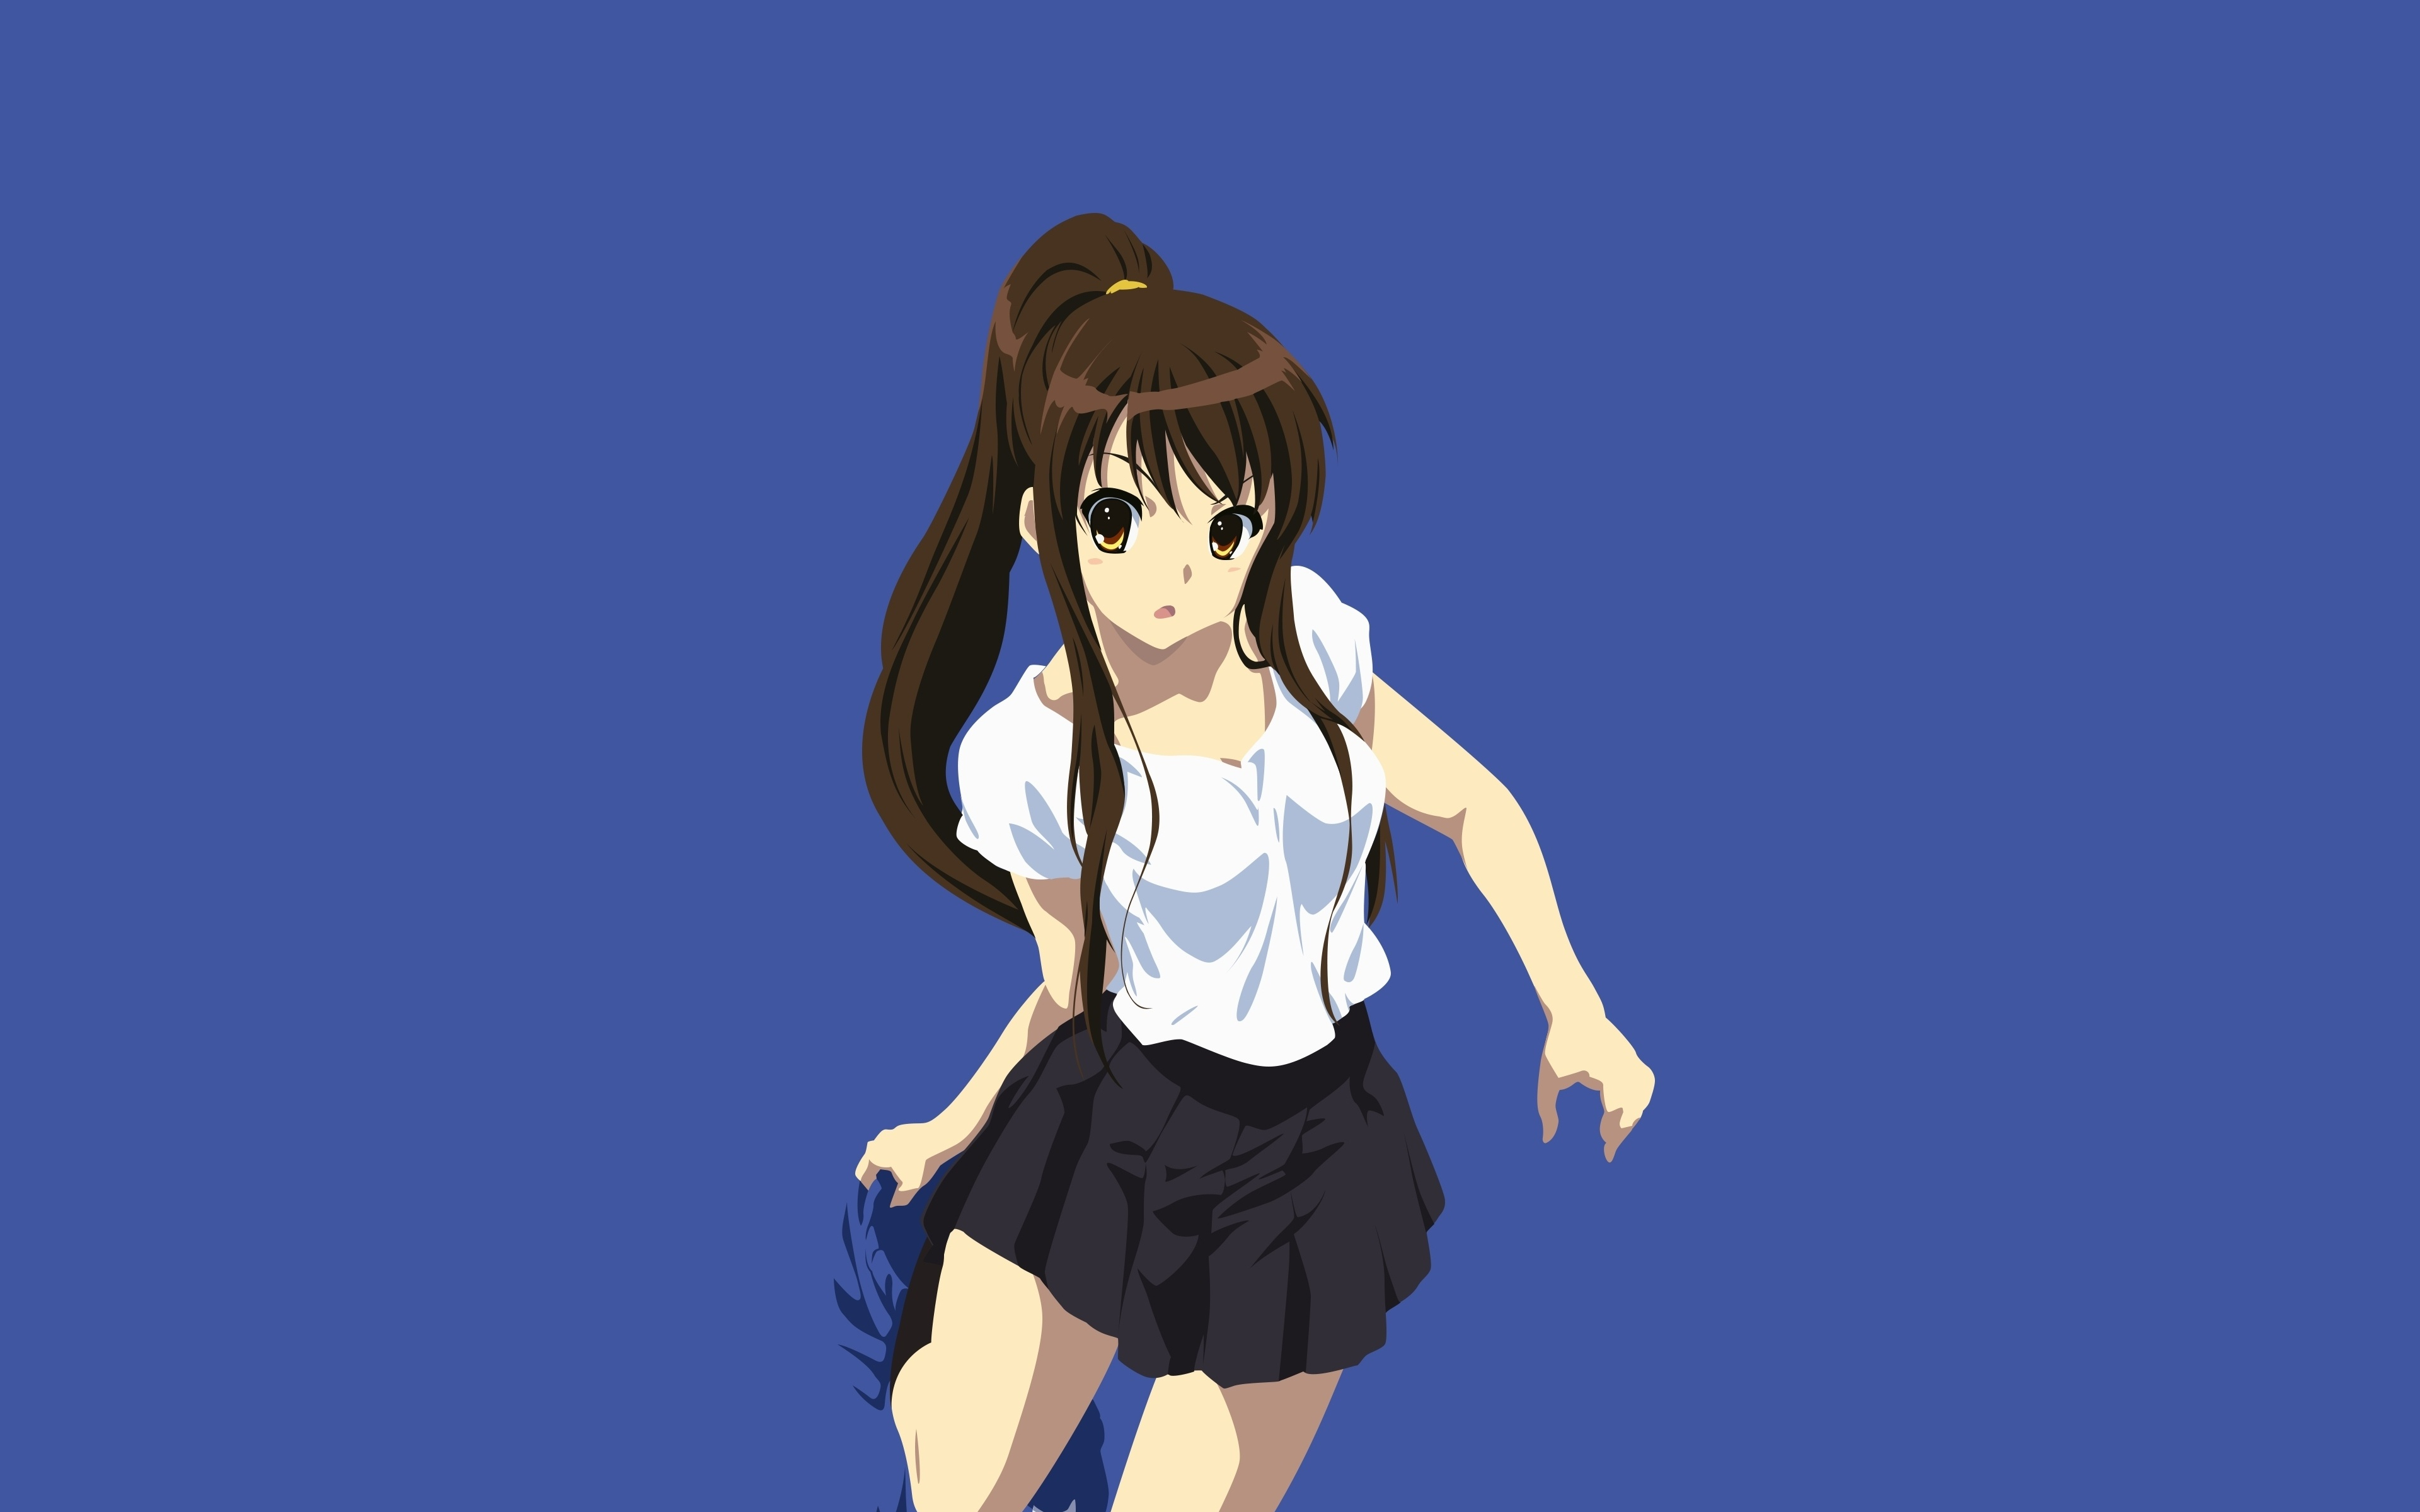 Download wallpaper x cute anime girl minimal haruhi suzumiya k wallaper k ultra hd wallpaper x hd background